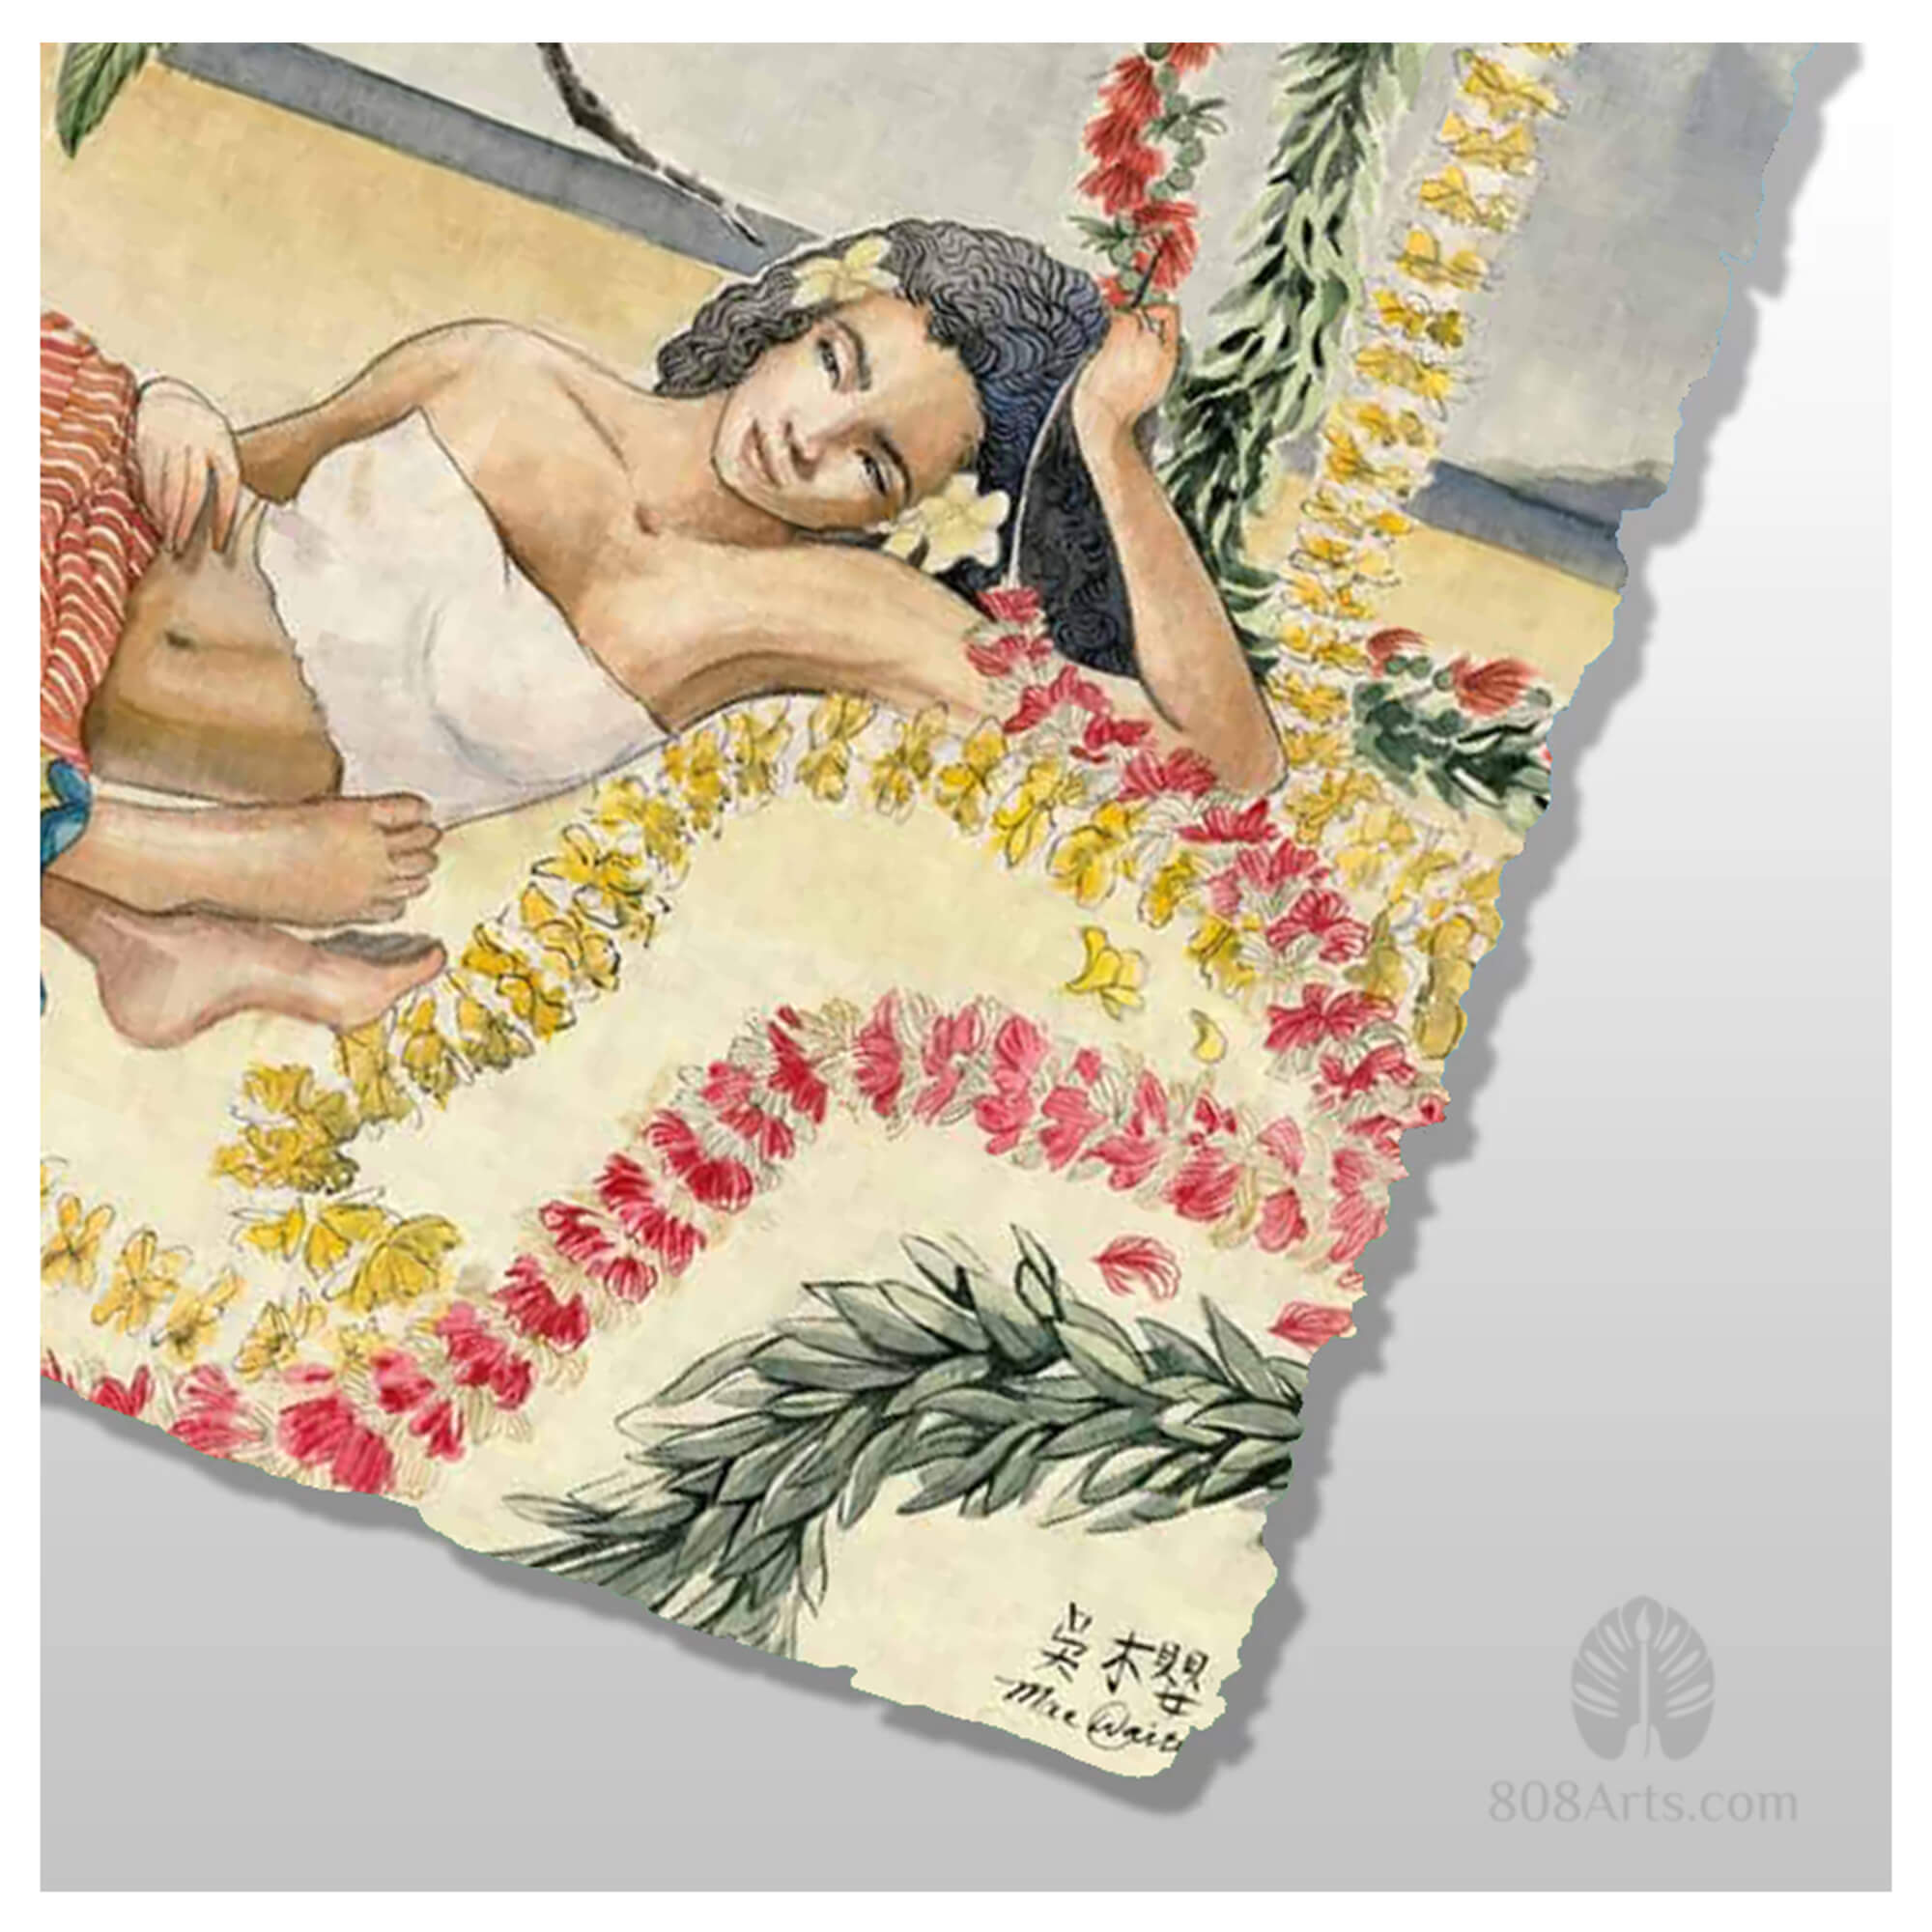 Deckled print edge detail of artwork Lounging Lei Ladies by Hawaii artist Mae Waite